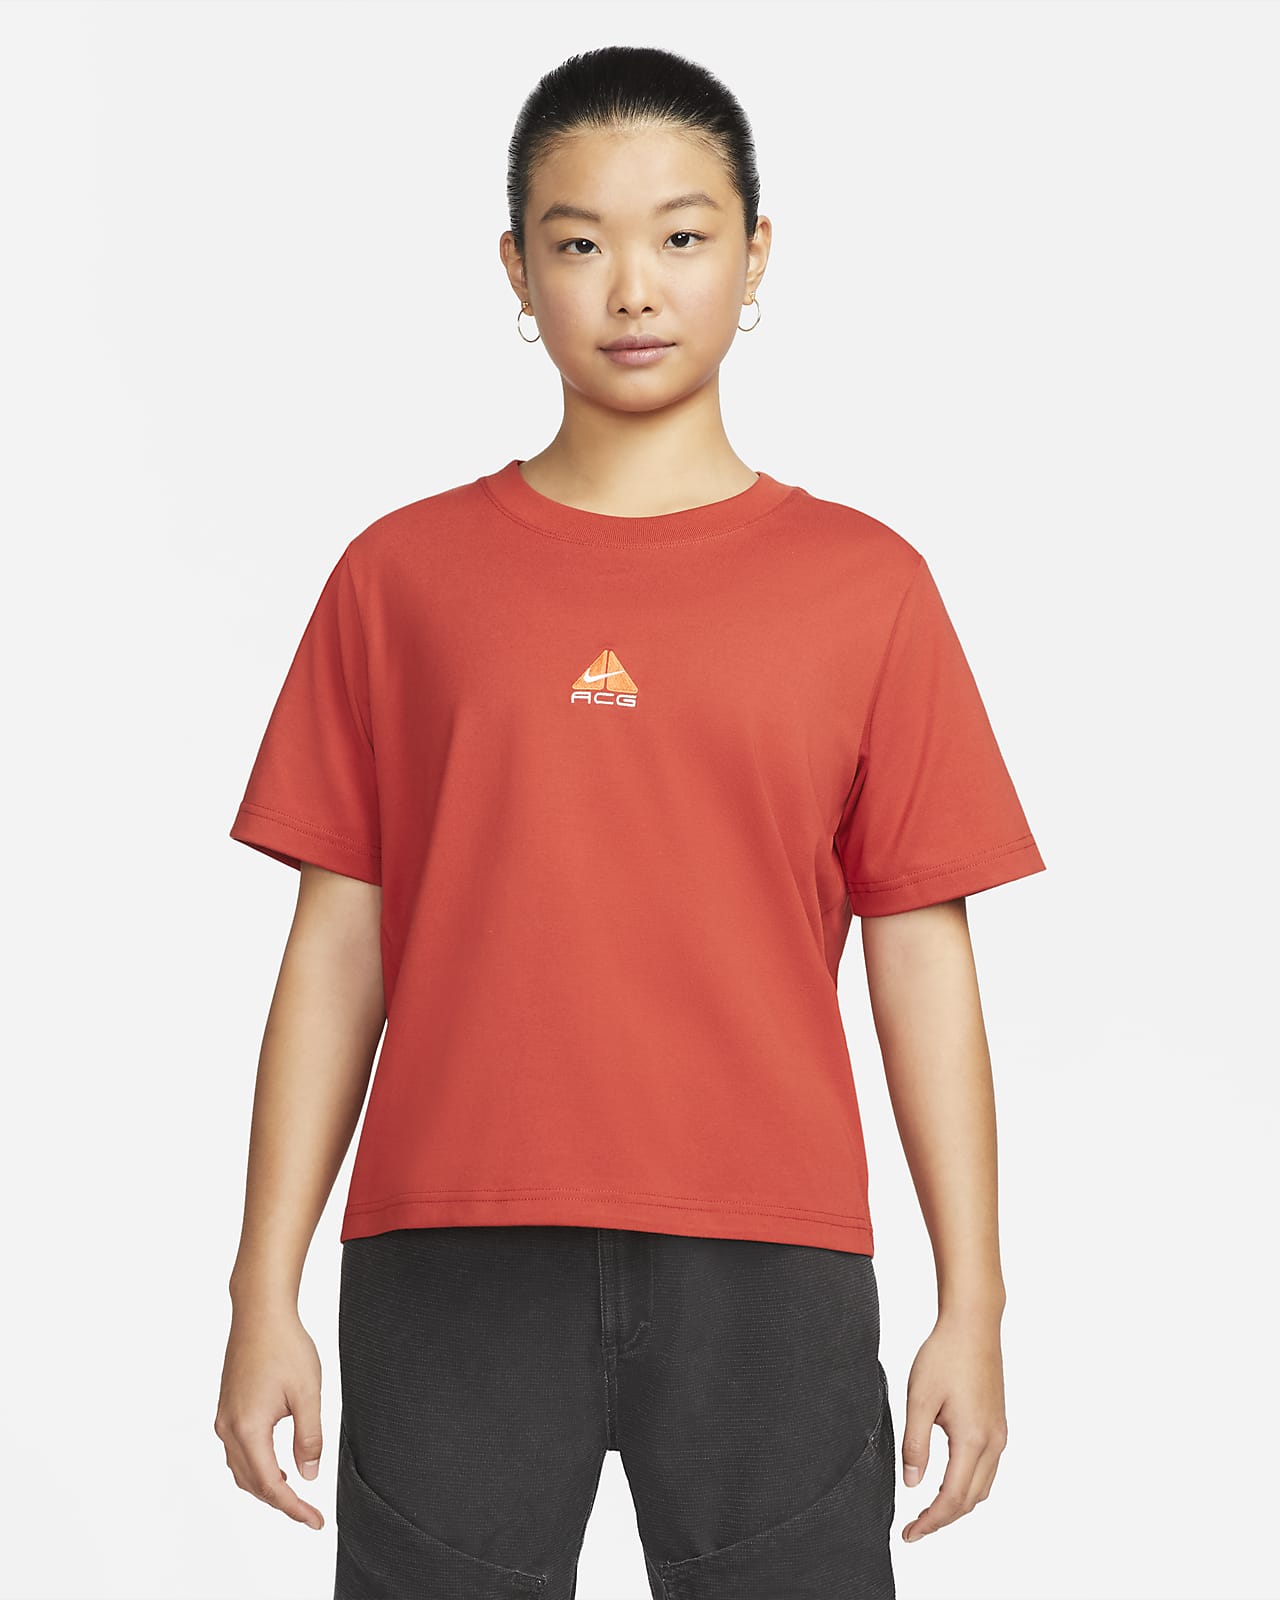 Nike ACG Women's Short-Sleeve T-Shirt